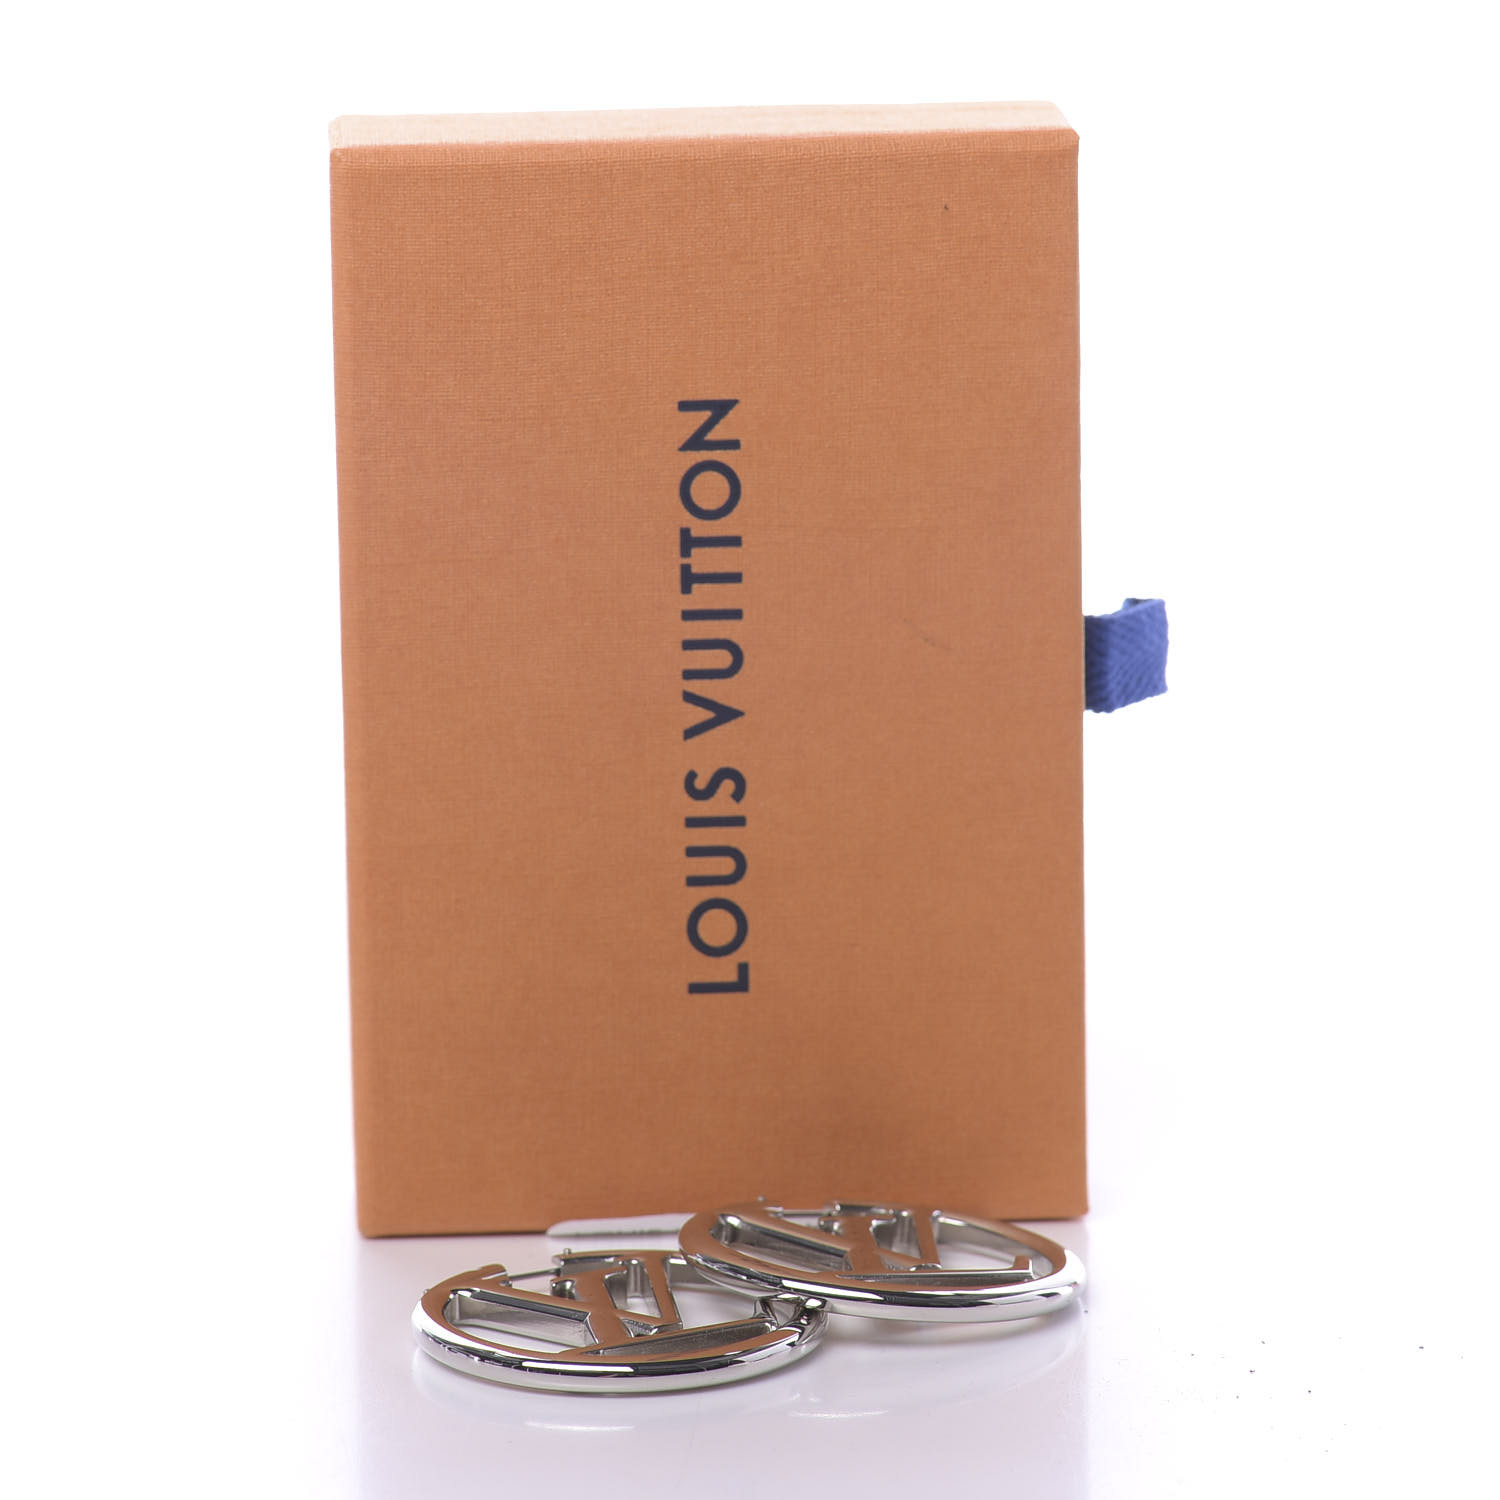 Louis Vuitton Gold Louise Hoop GM Earrings – The Closet